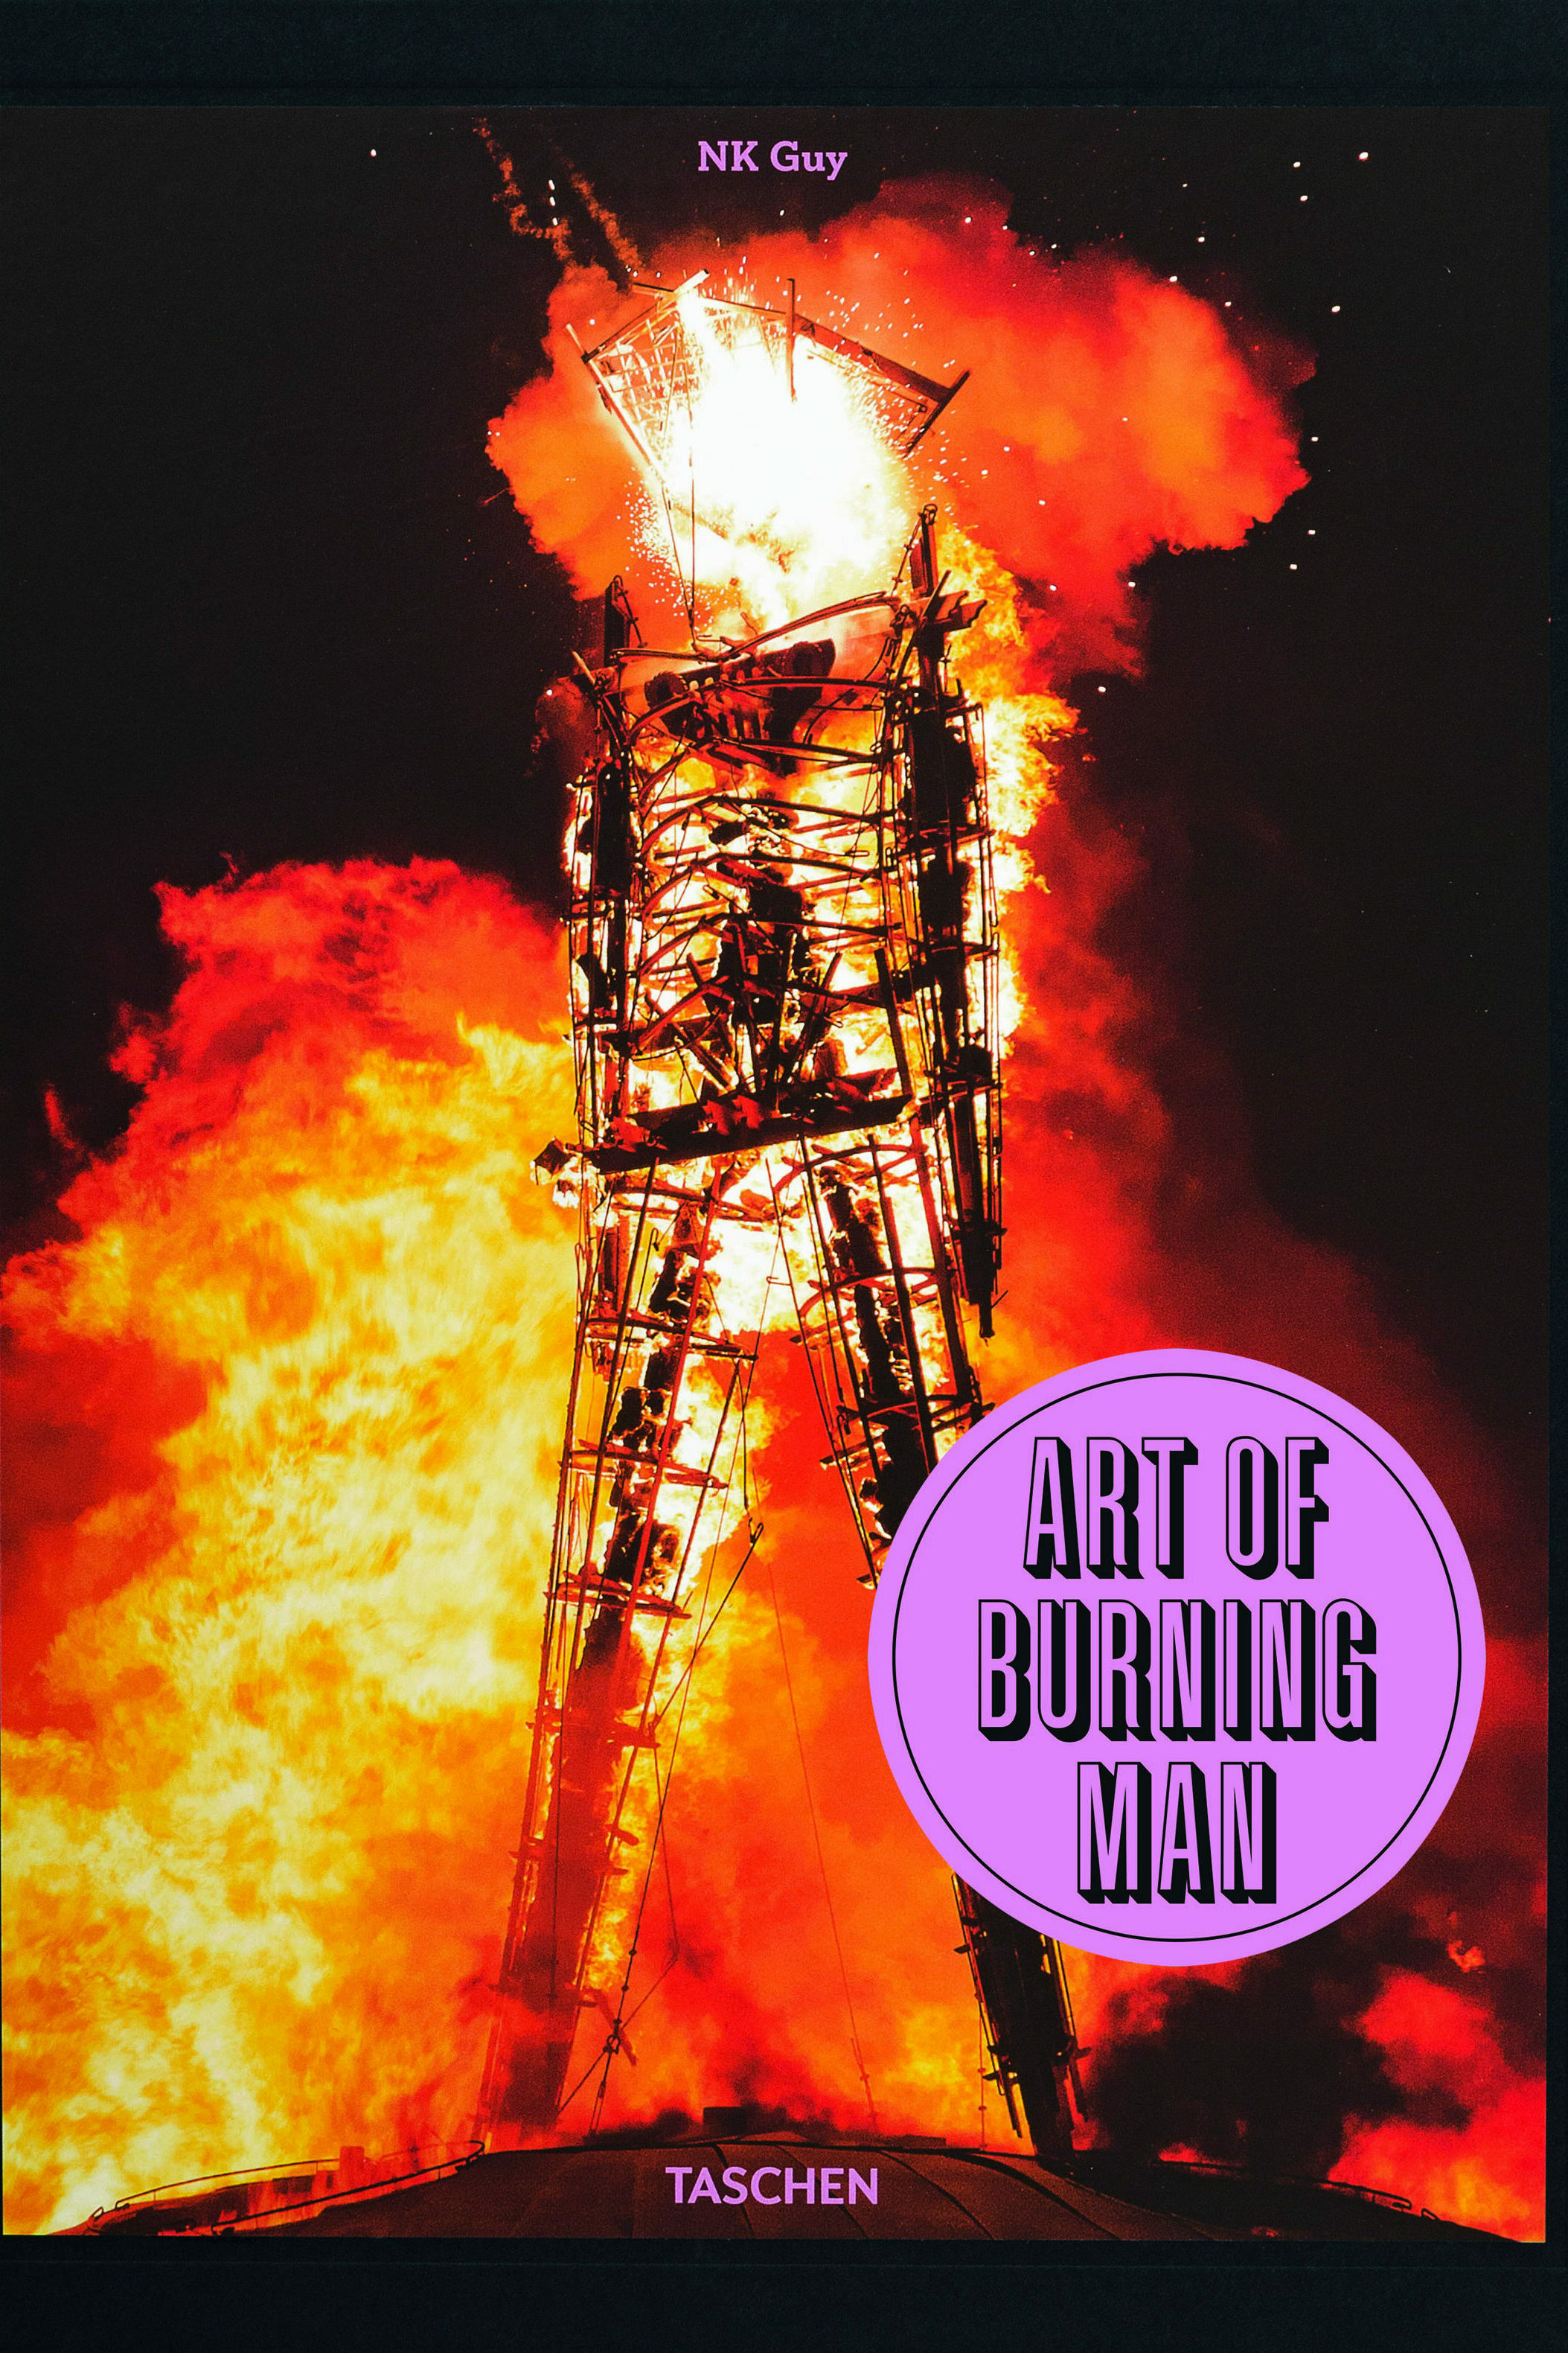 art of burning man, nk guy, kunstbuch bildband fotobuch